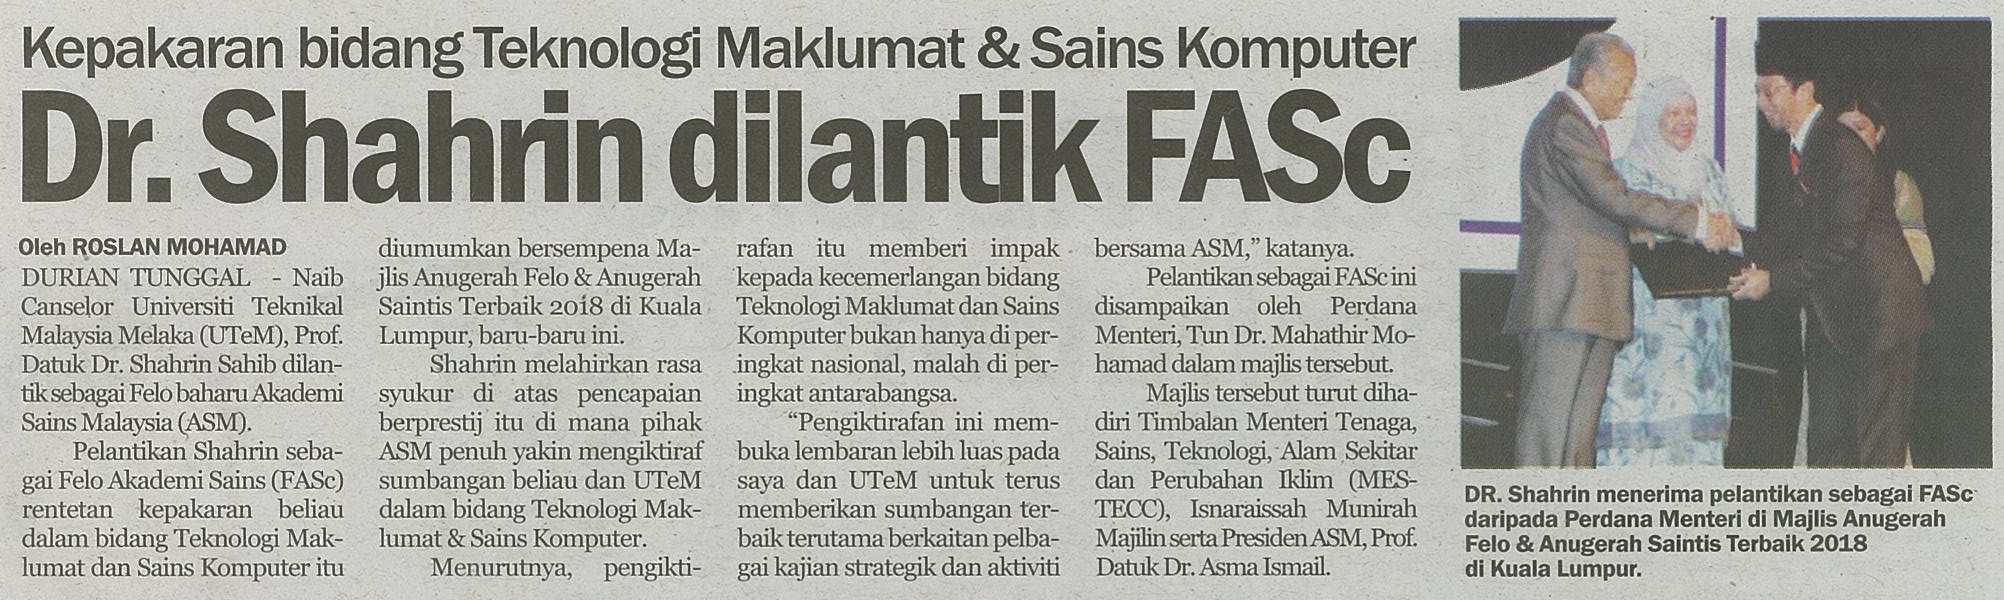 Dr. Shahrin dilantik FASc